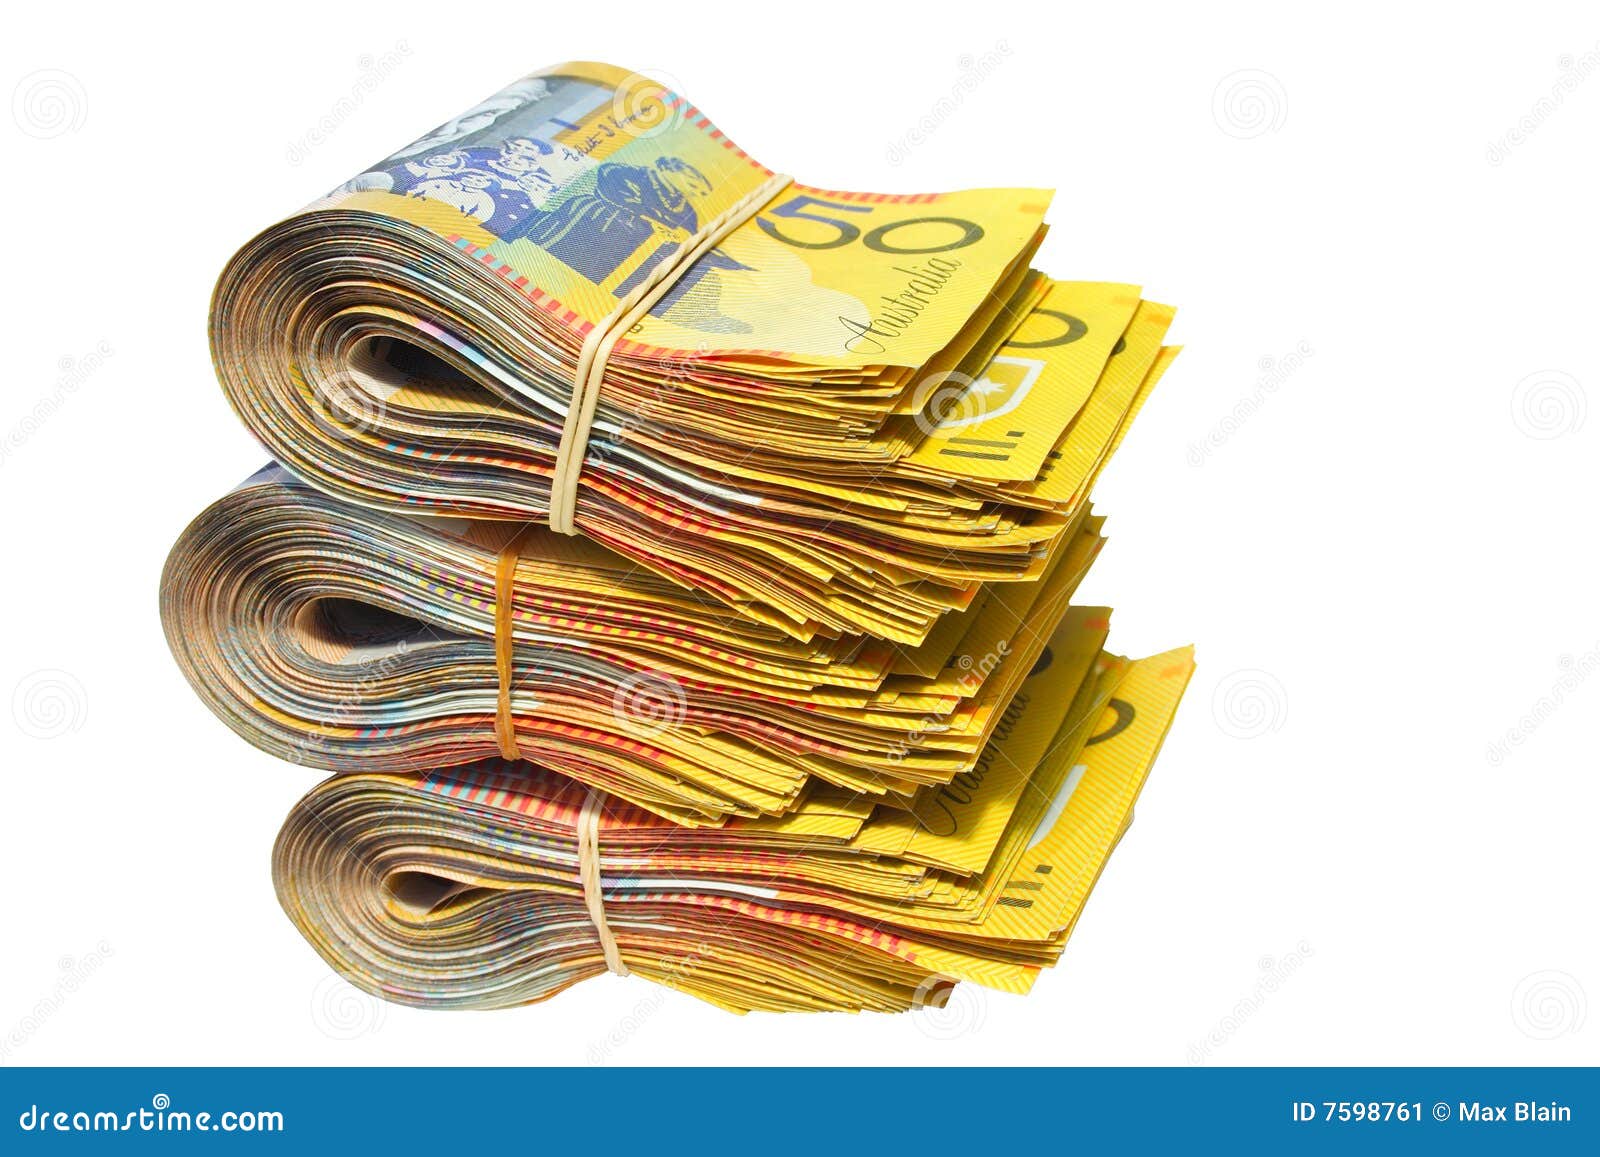 free clipart australian money - photo #26